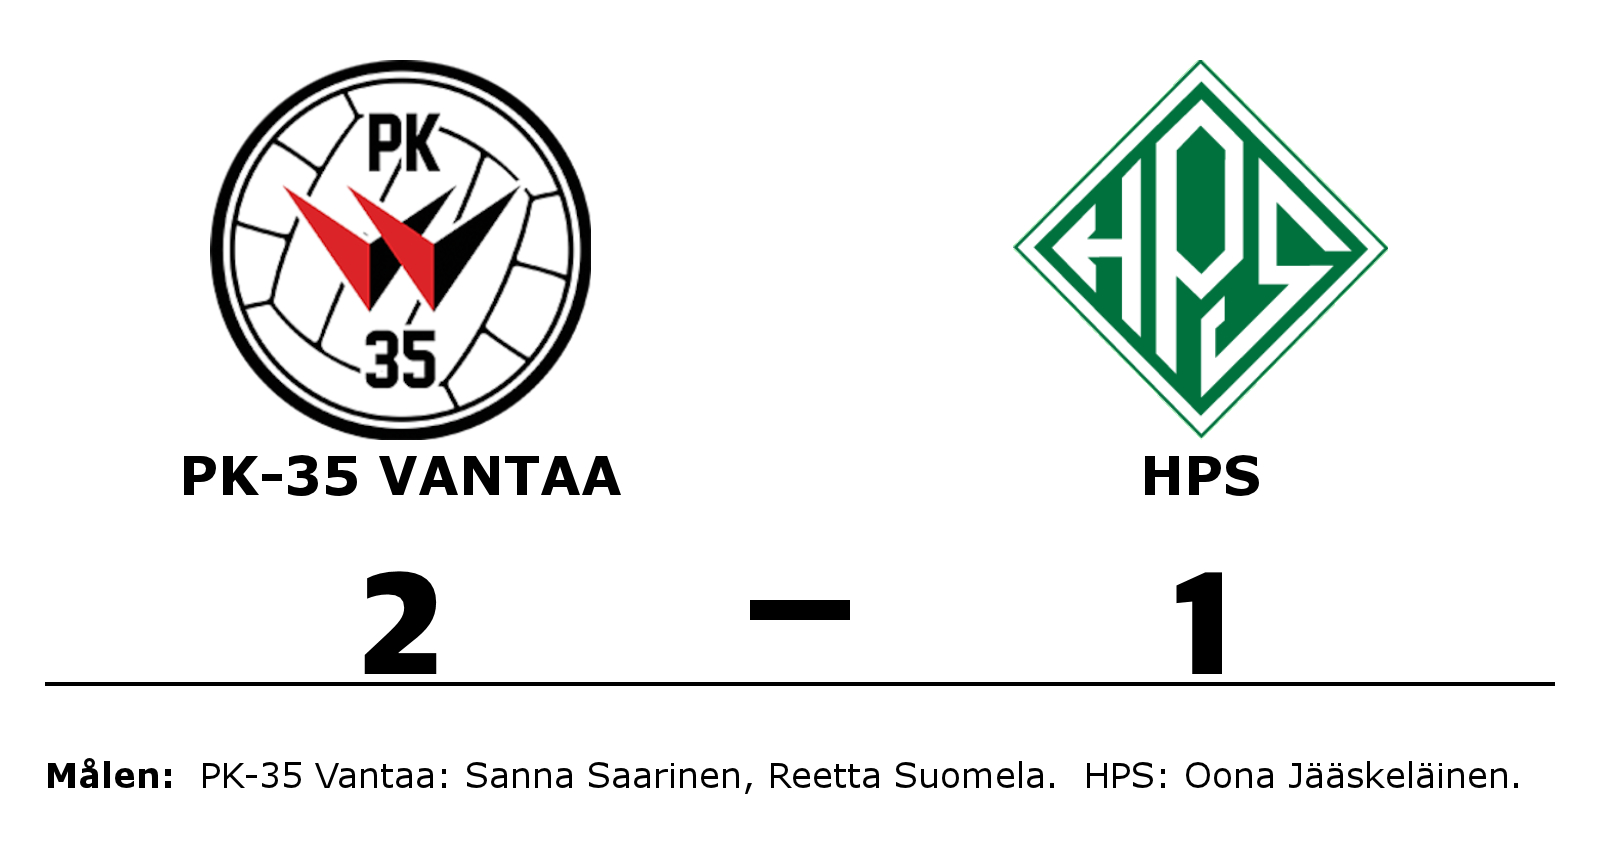 PK-35 Vantaa vann mot HPS